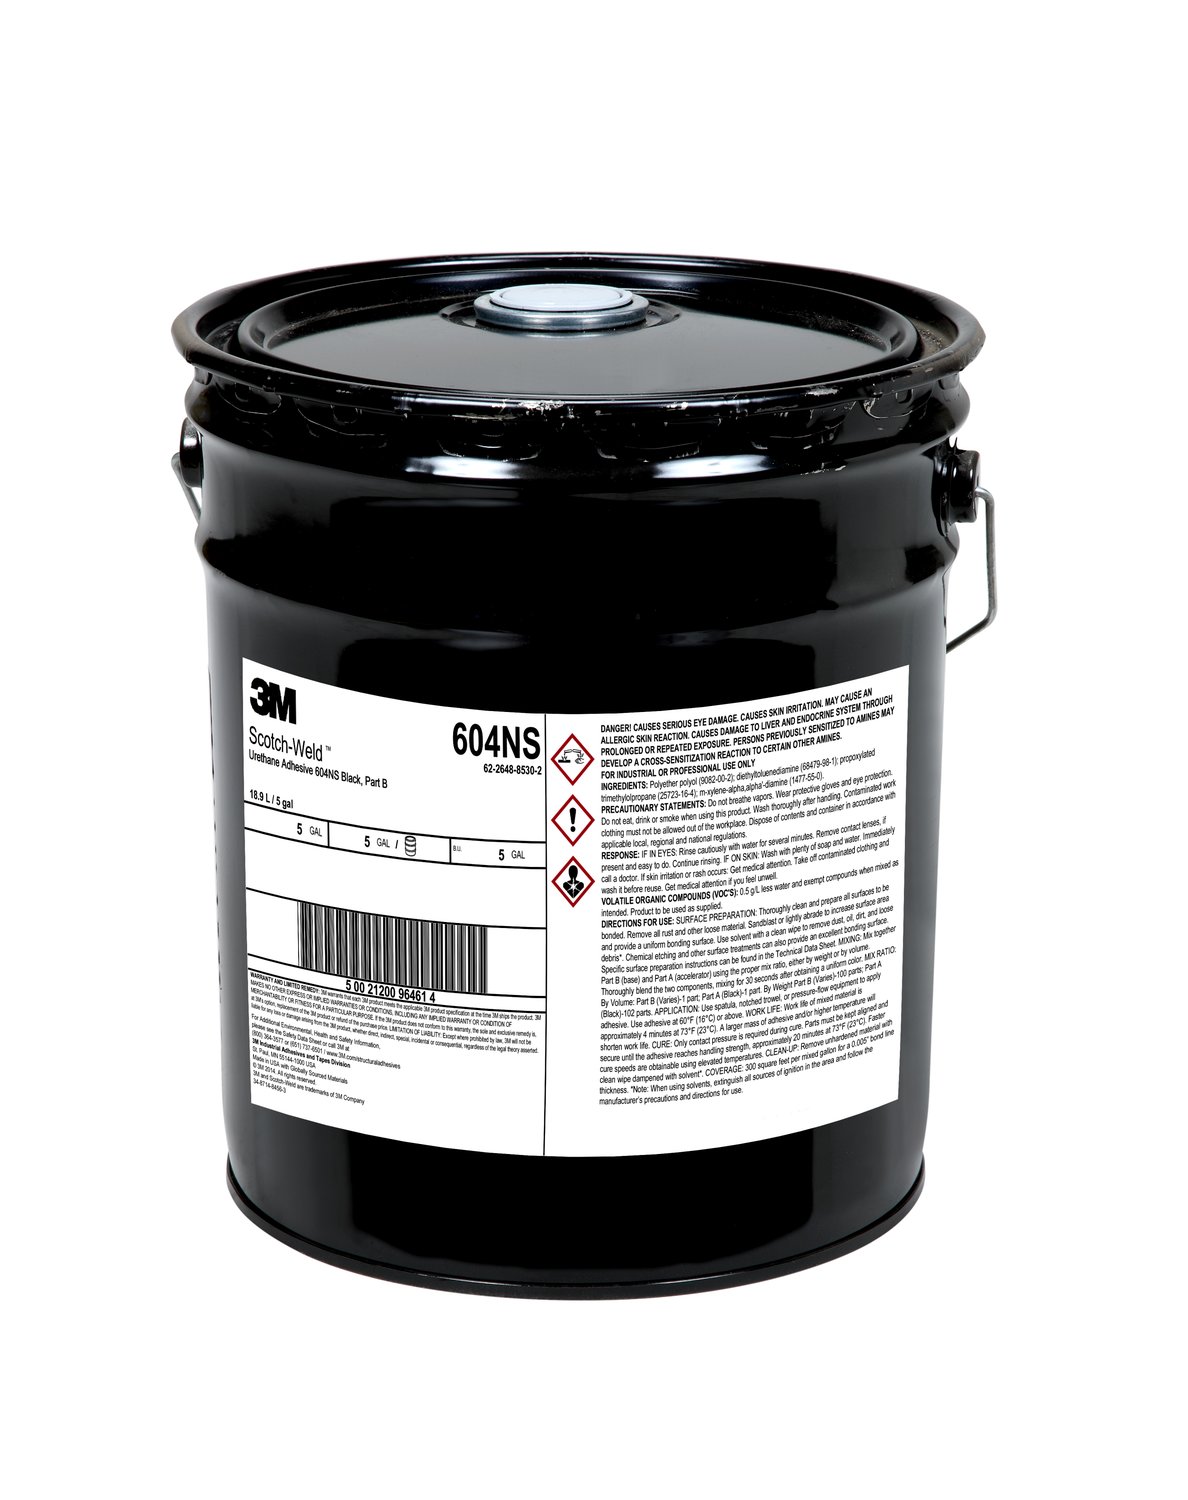 7010367265 - 3M Scotch-Weld Urethane Adhesive 604NS, Black, Part B, 5 Gallon
(Pail), Drum